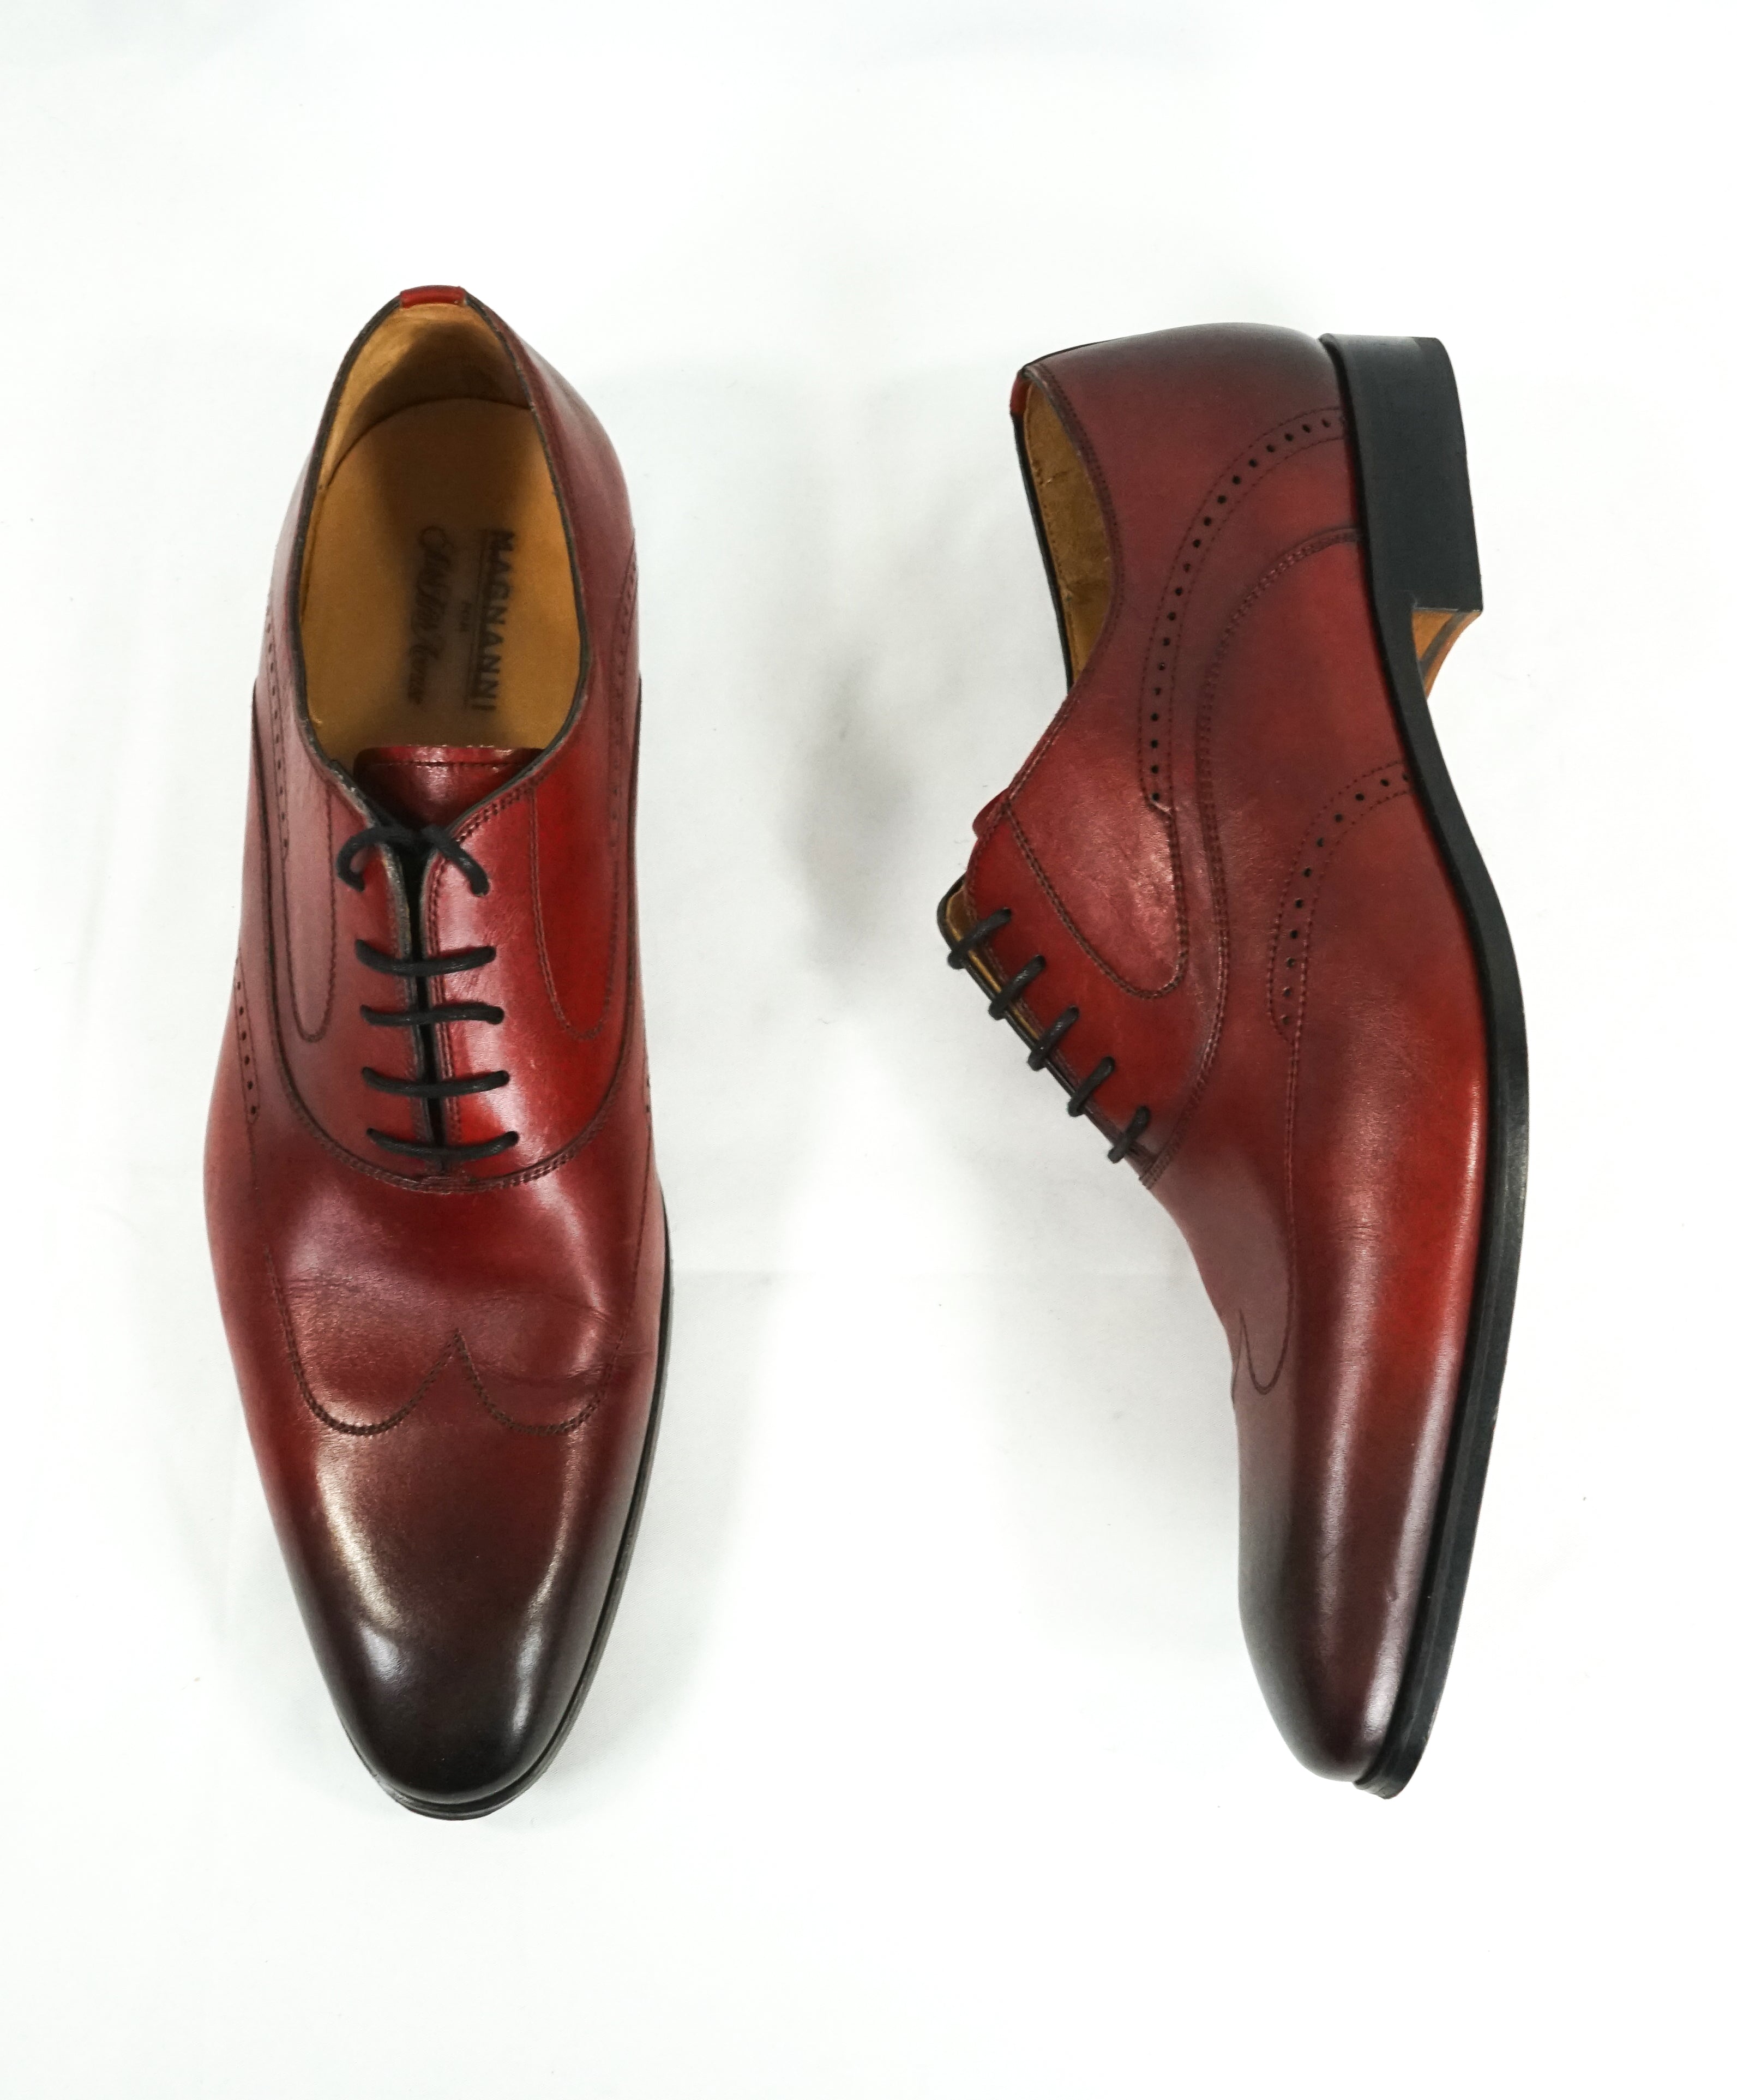 magnanni burgundy shoes